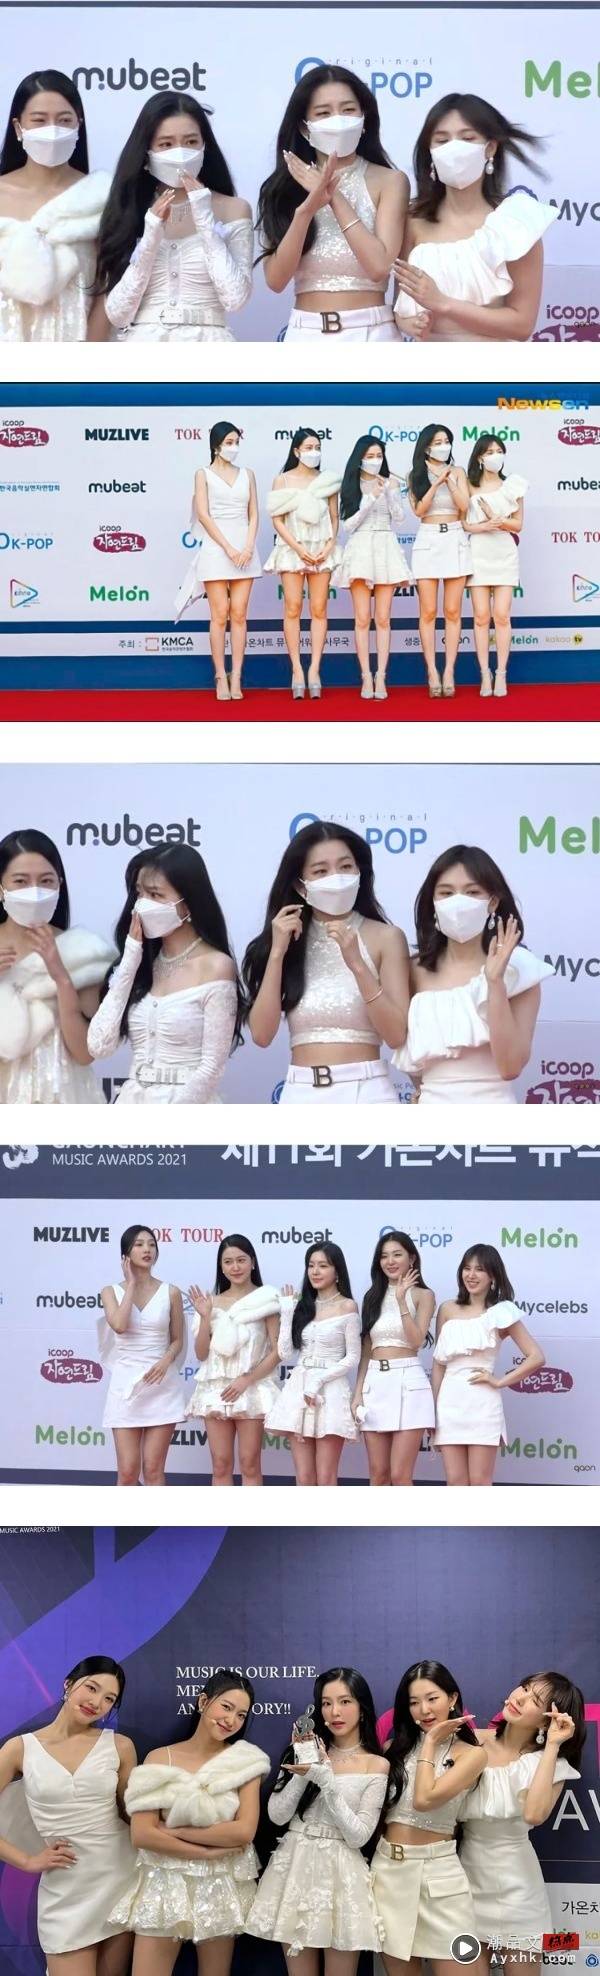 Red Velvet走红毯被要求脱口罩！僵持30秒尴尬画面曝光 娱乐资讯 图1张